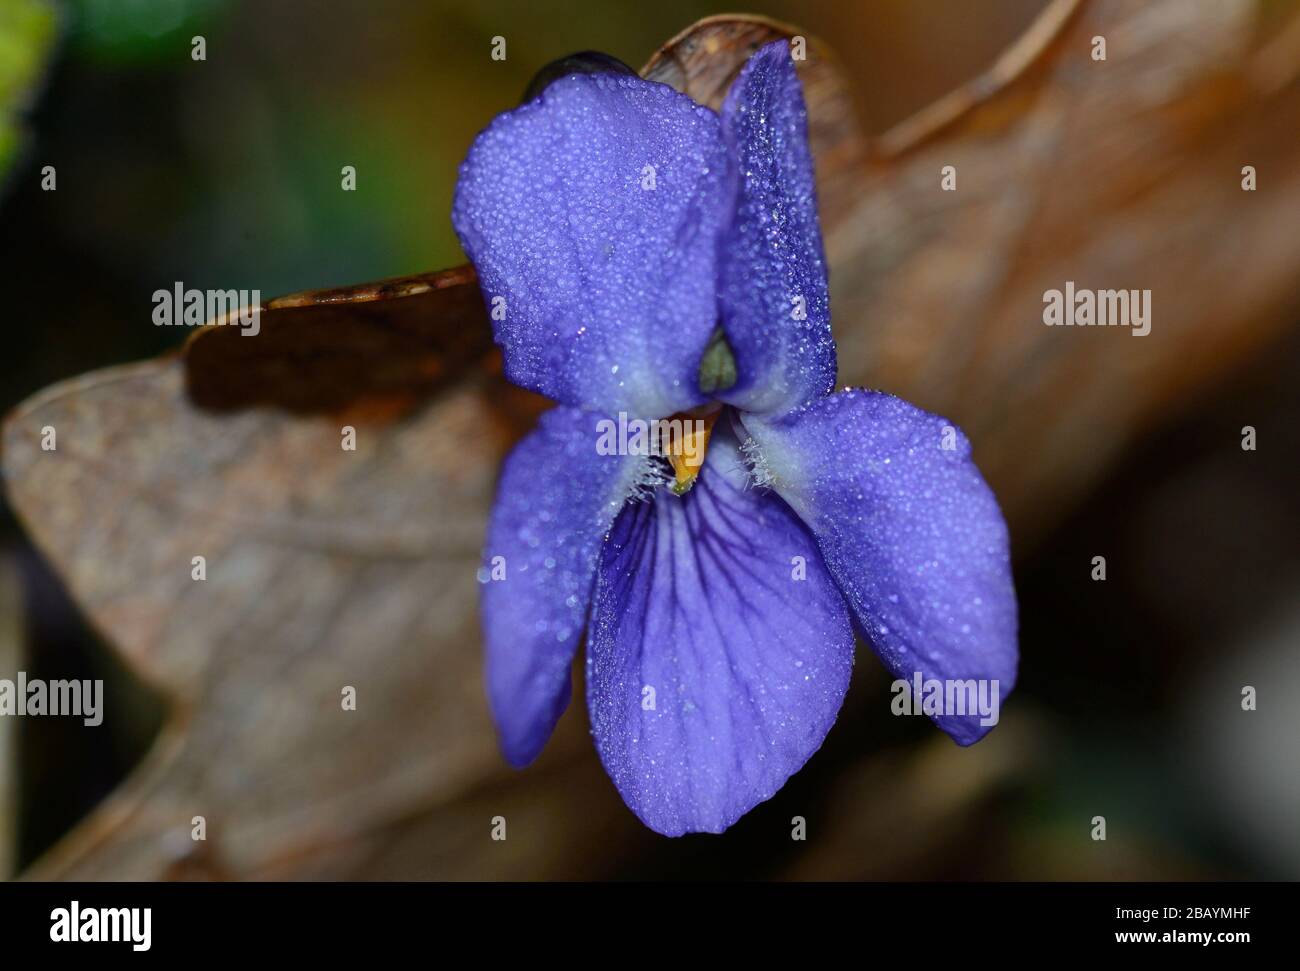 close-up ov purple violet flower on background of dry leaf Stock Photo